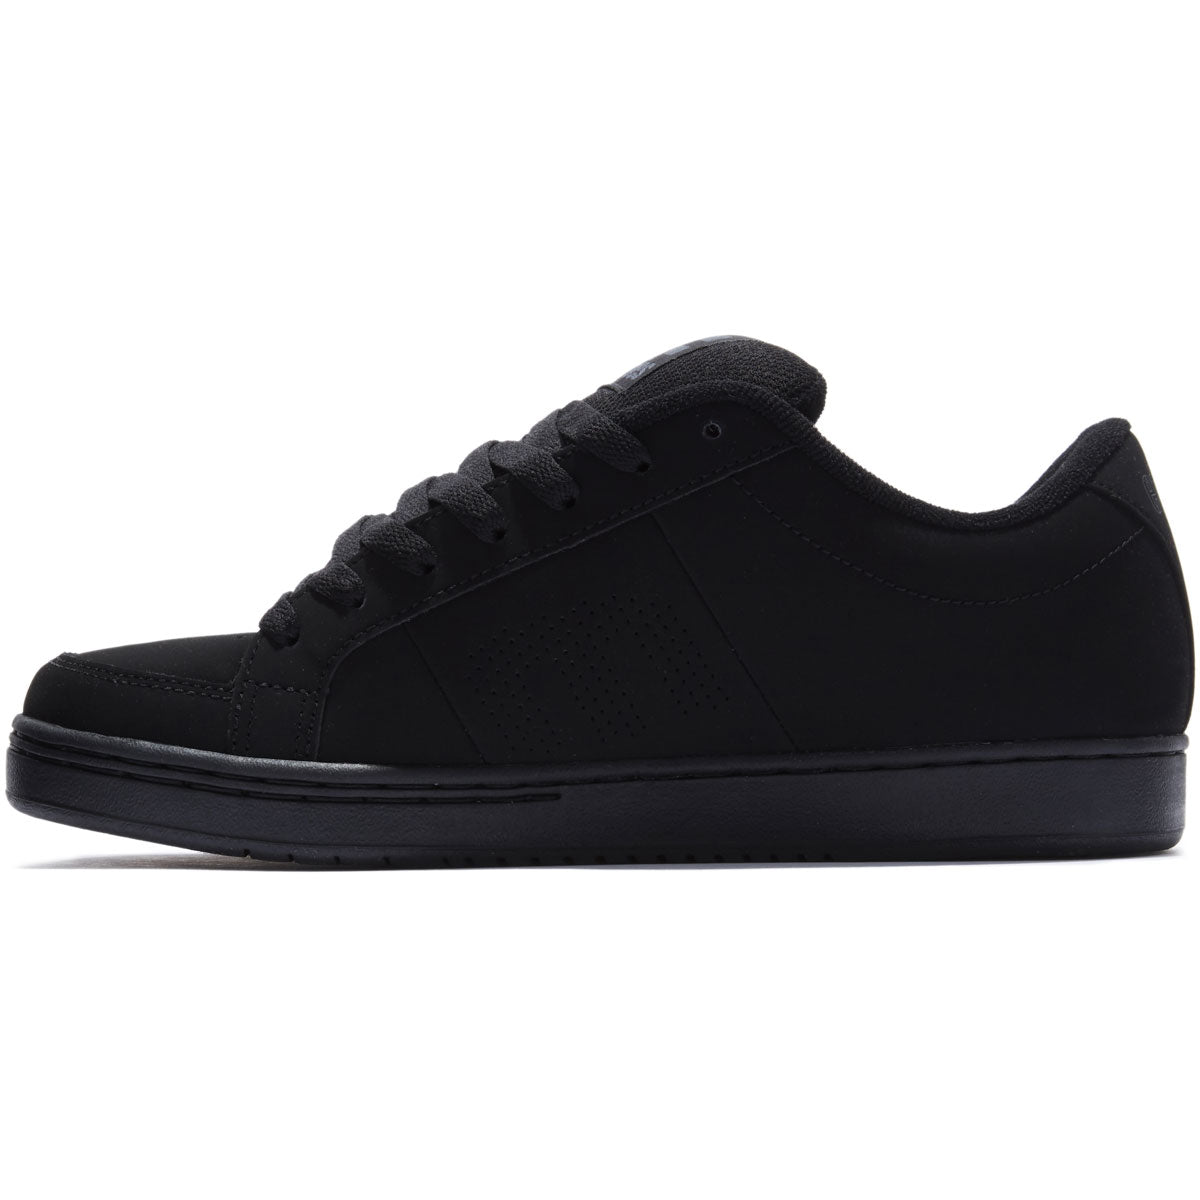 Etnies Kingpin Shoes - Black/Black image 2